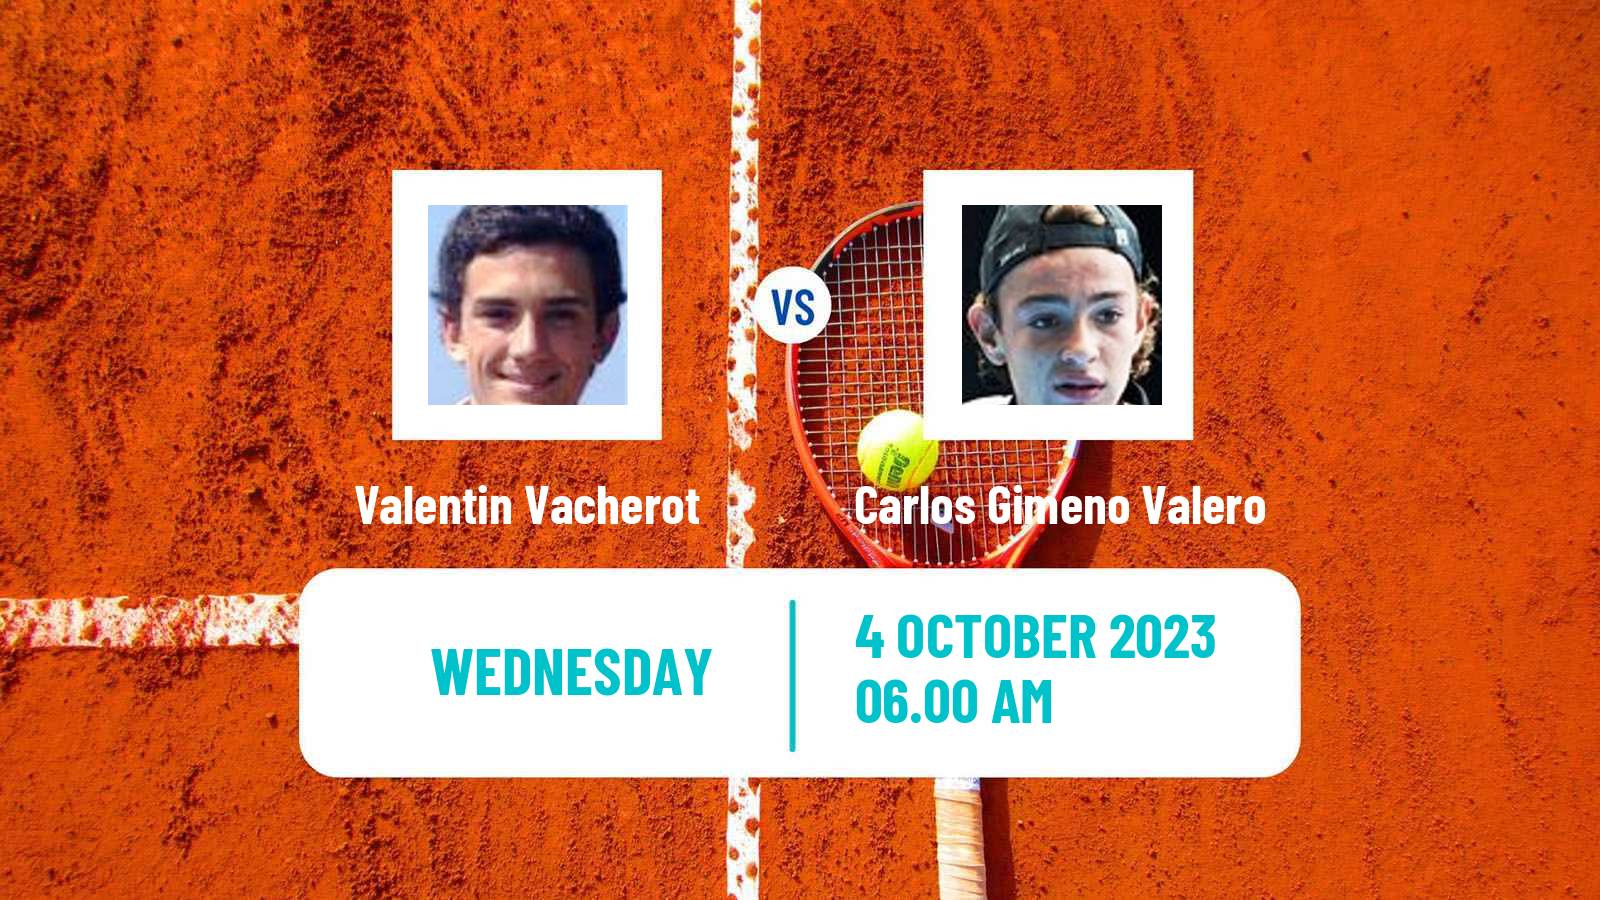 Tennis ITF M25 Zaragoza Men Valentin Vacherot - Carlos Gimeno Valero